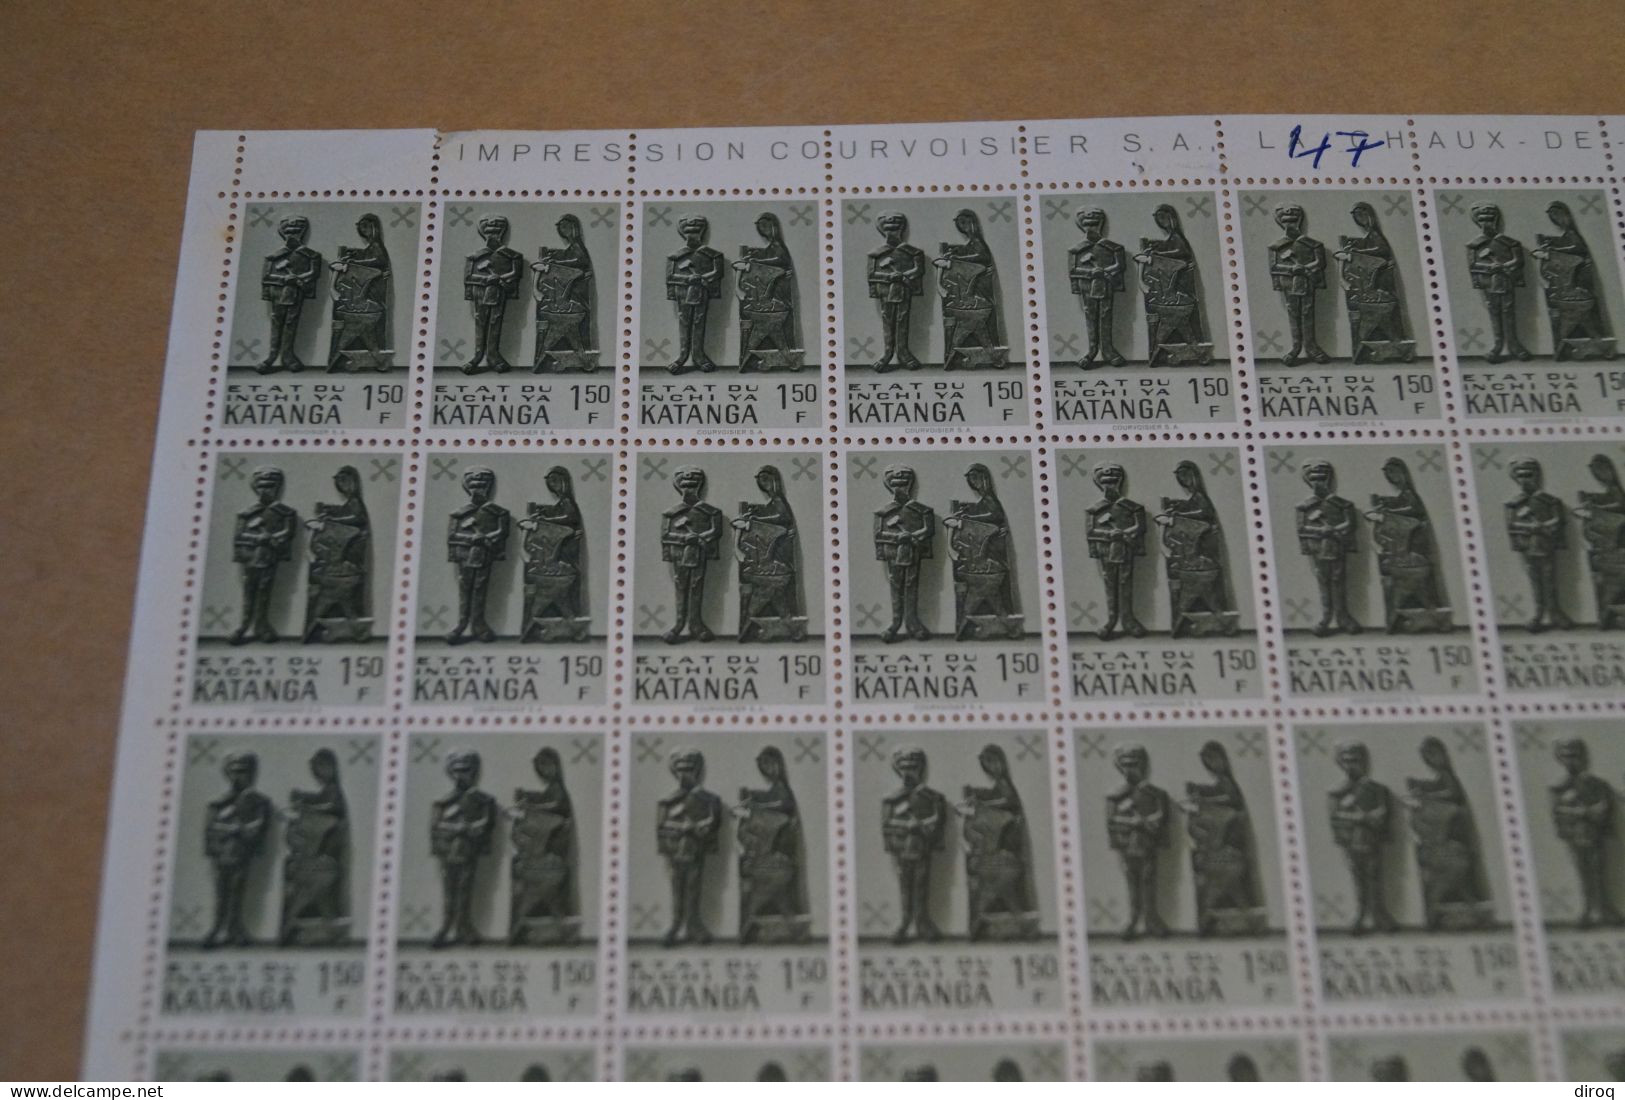 Feuille Avec 98 Timbres Du Katanga,Courvoisier,1,50 Fr.bel état Pour Collection - Katanga